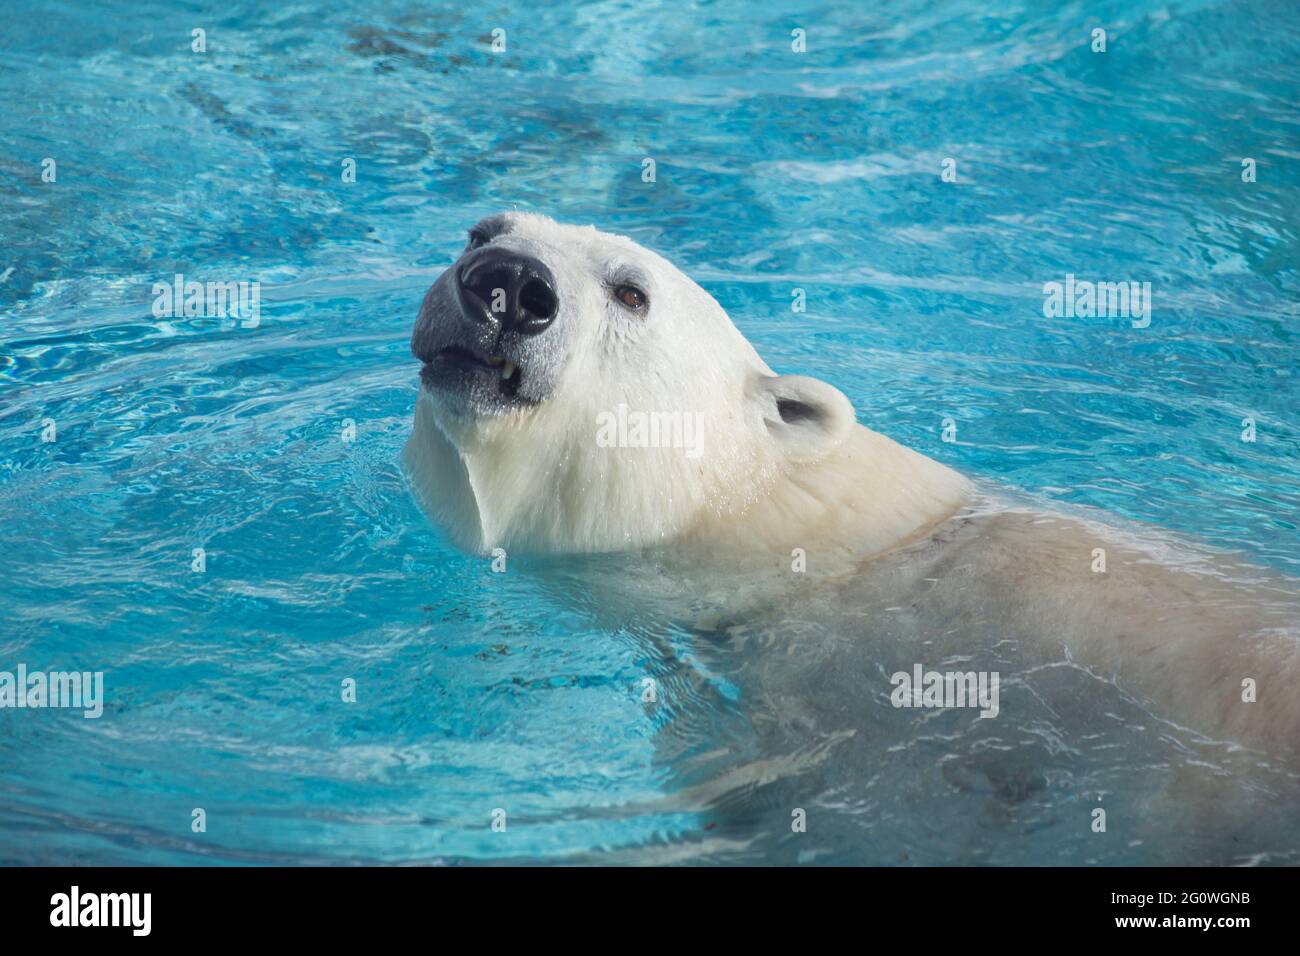 Big polar bear is looking and swimming in the blue water. Head close up. Ursus maritimus or Thalarctos Maritimus. Animals in wildlife. Stock Photo